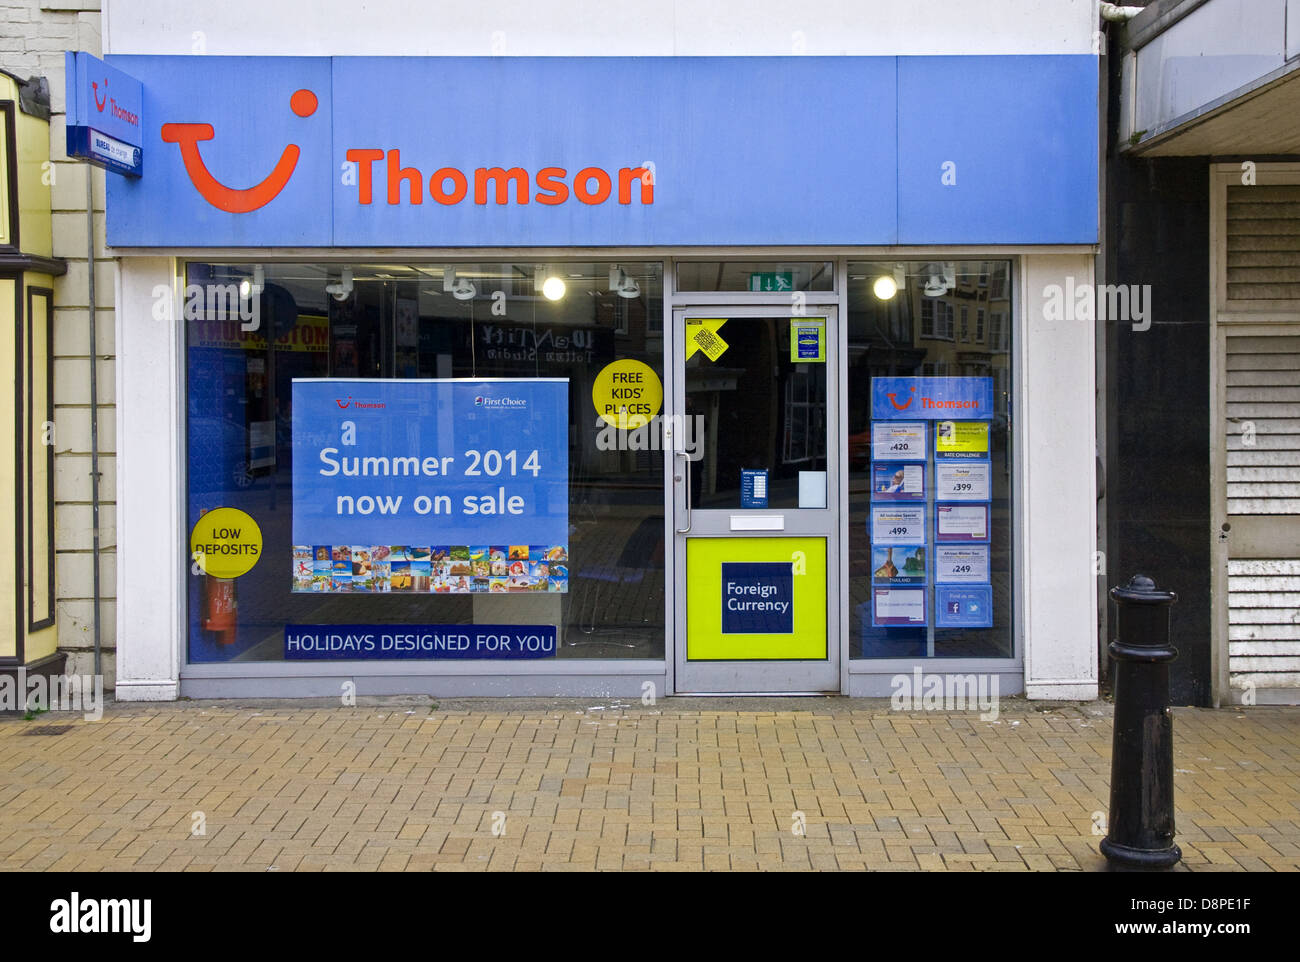 Thomson travel agency; Bridlington branch Stock Photo